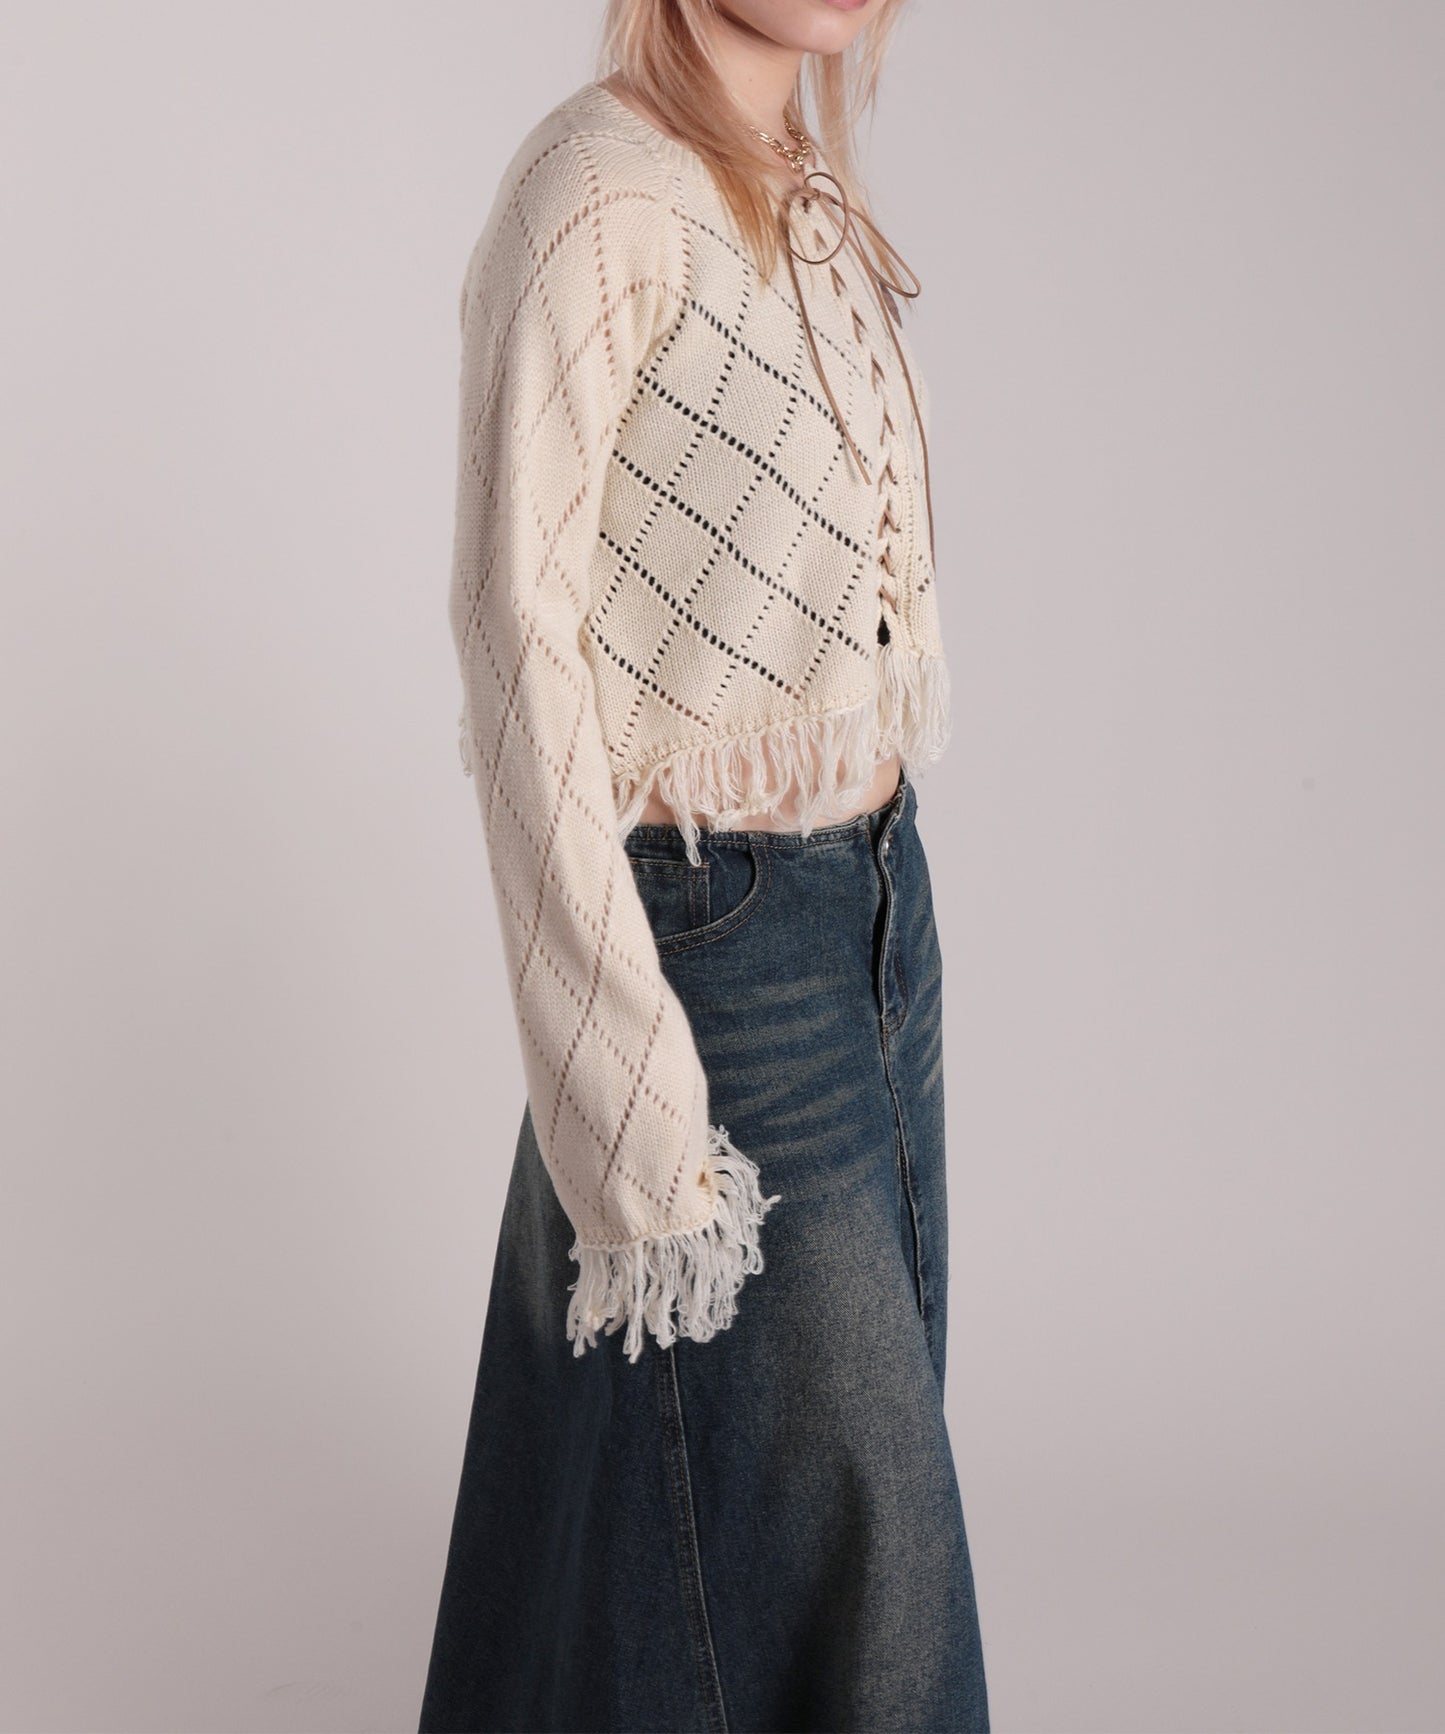 【HOOK】for girls　裾フリンジ透かし編み編み上げカーディガン